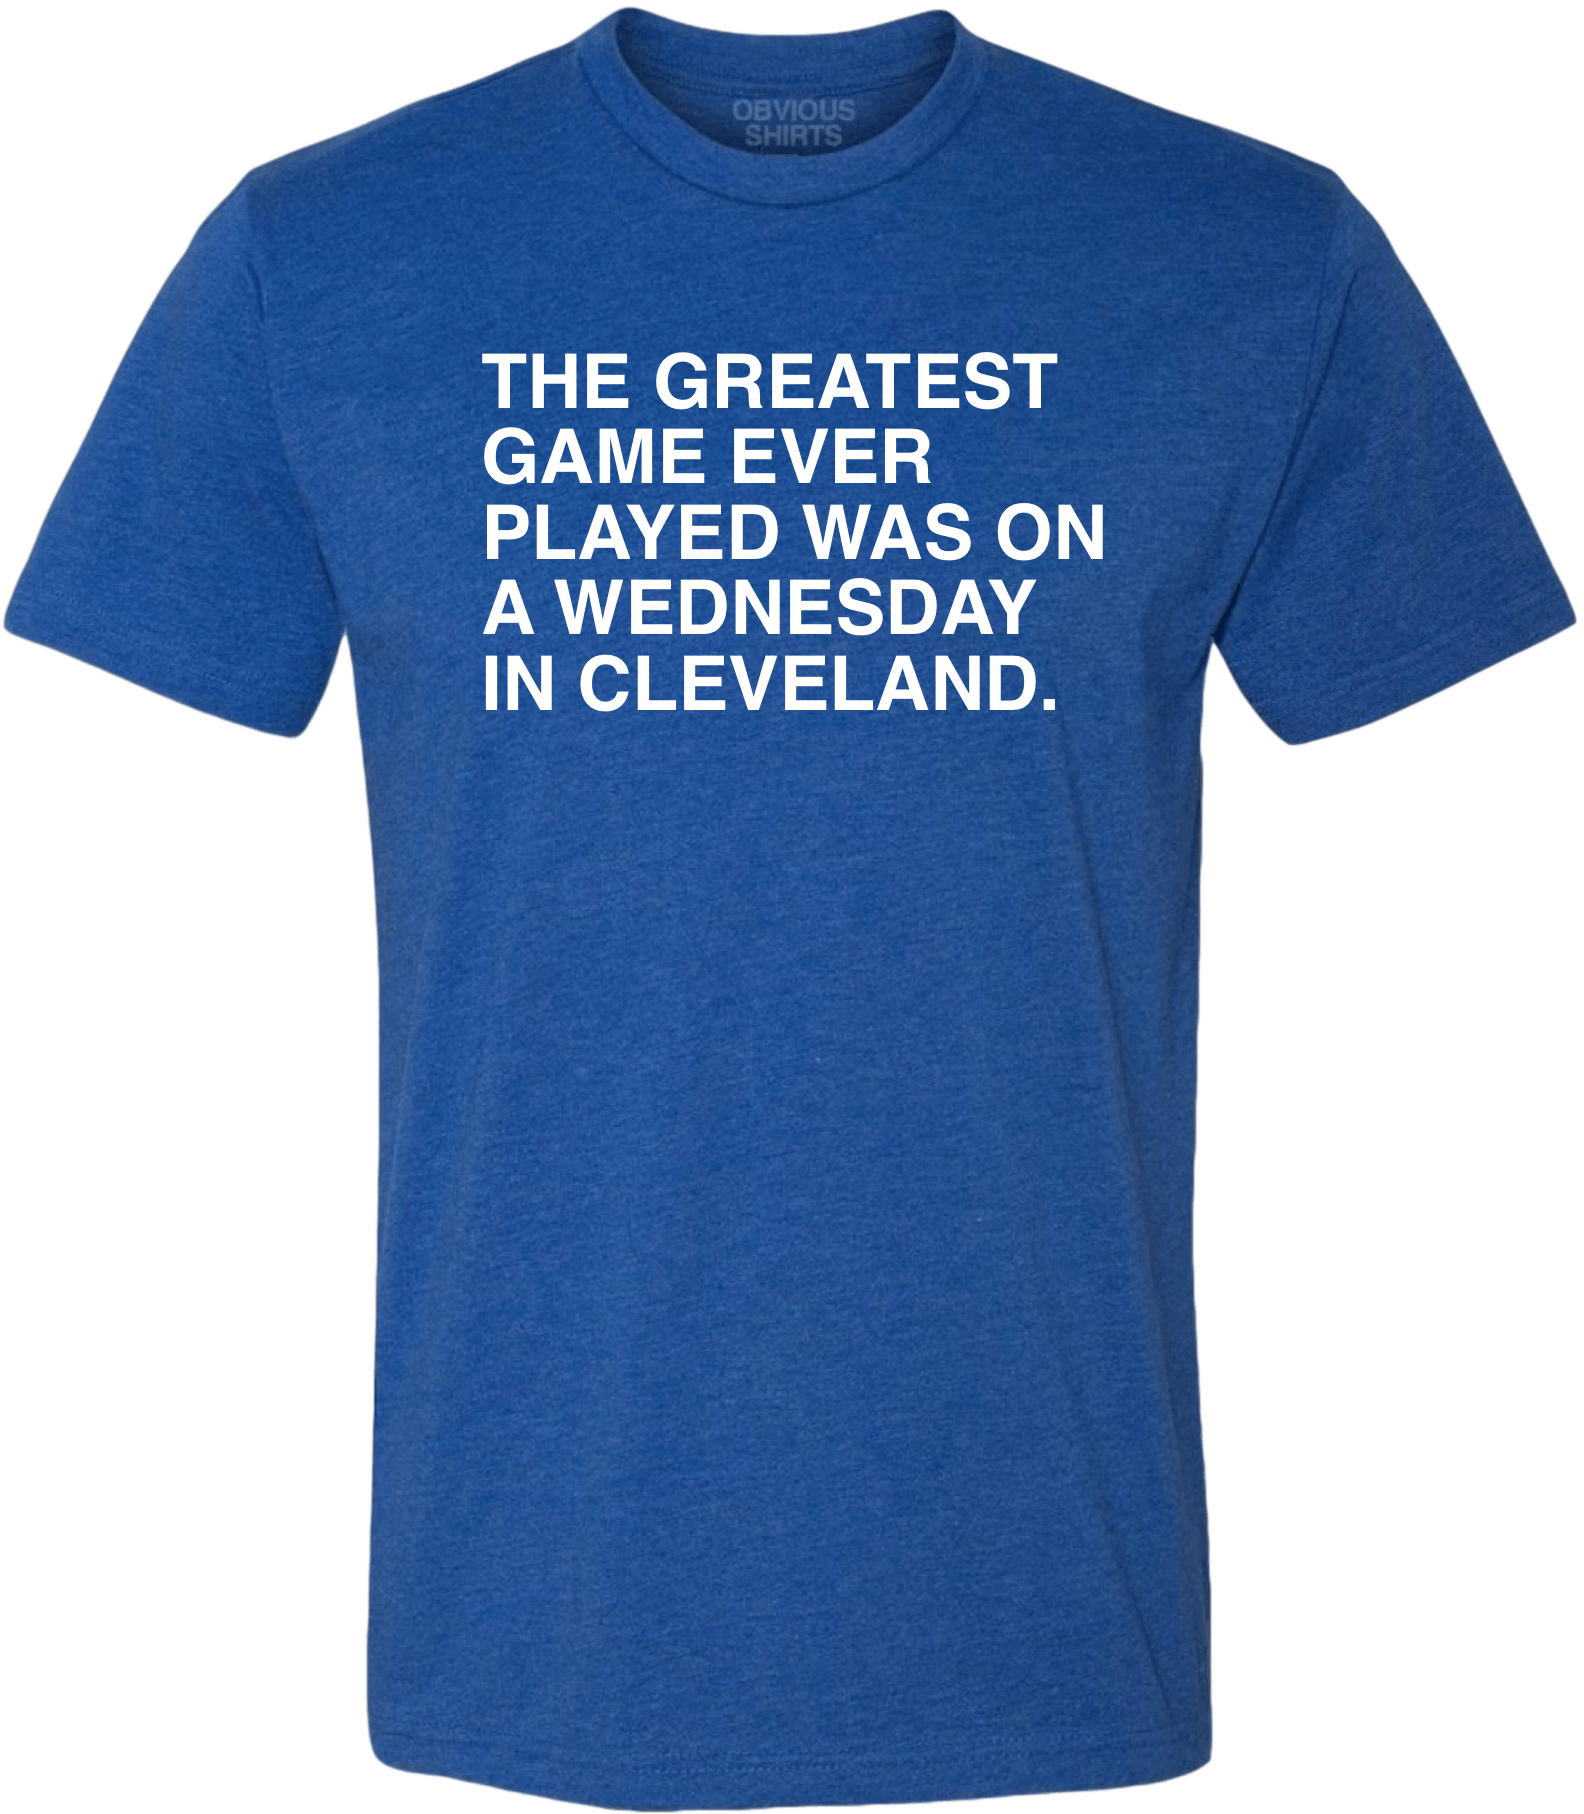 Cleveland cavs long sleeve graphic tee shirt sz LG